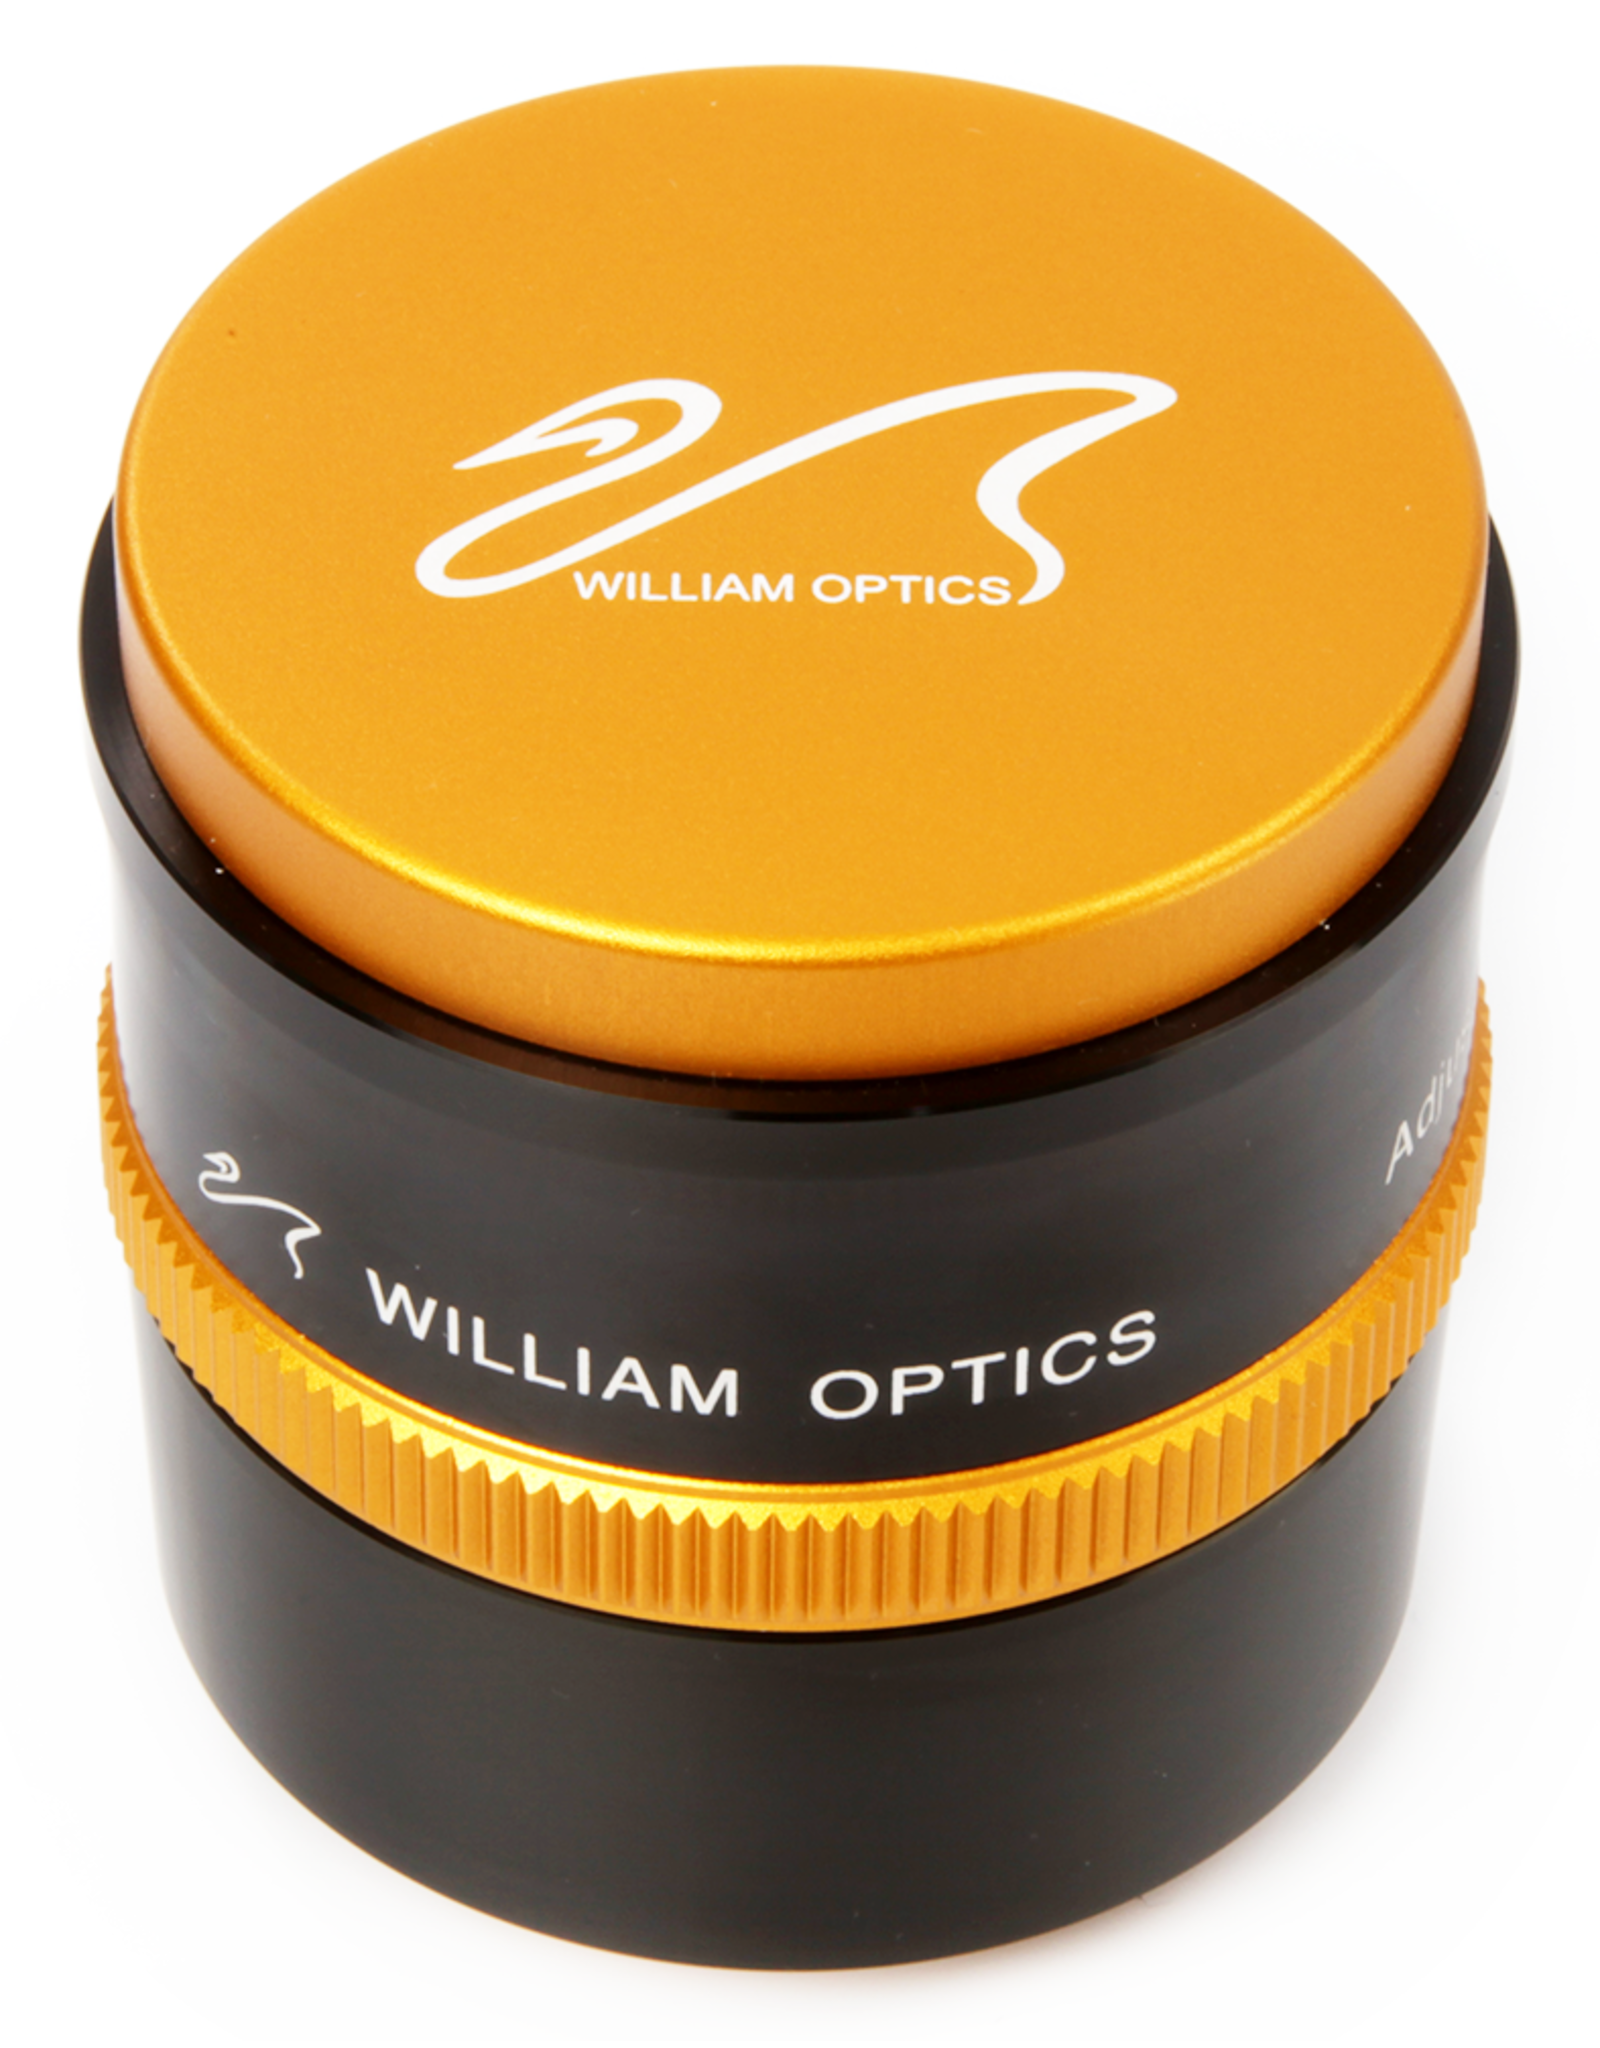 William Optics William Optics New Adjustable Flat6A III (T-mount not included)